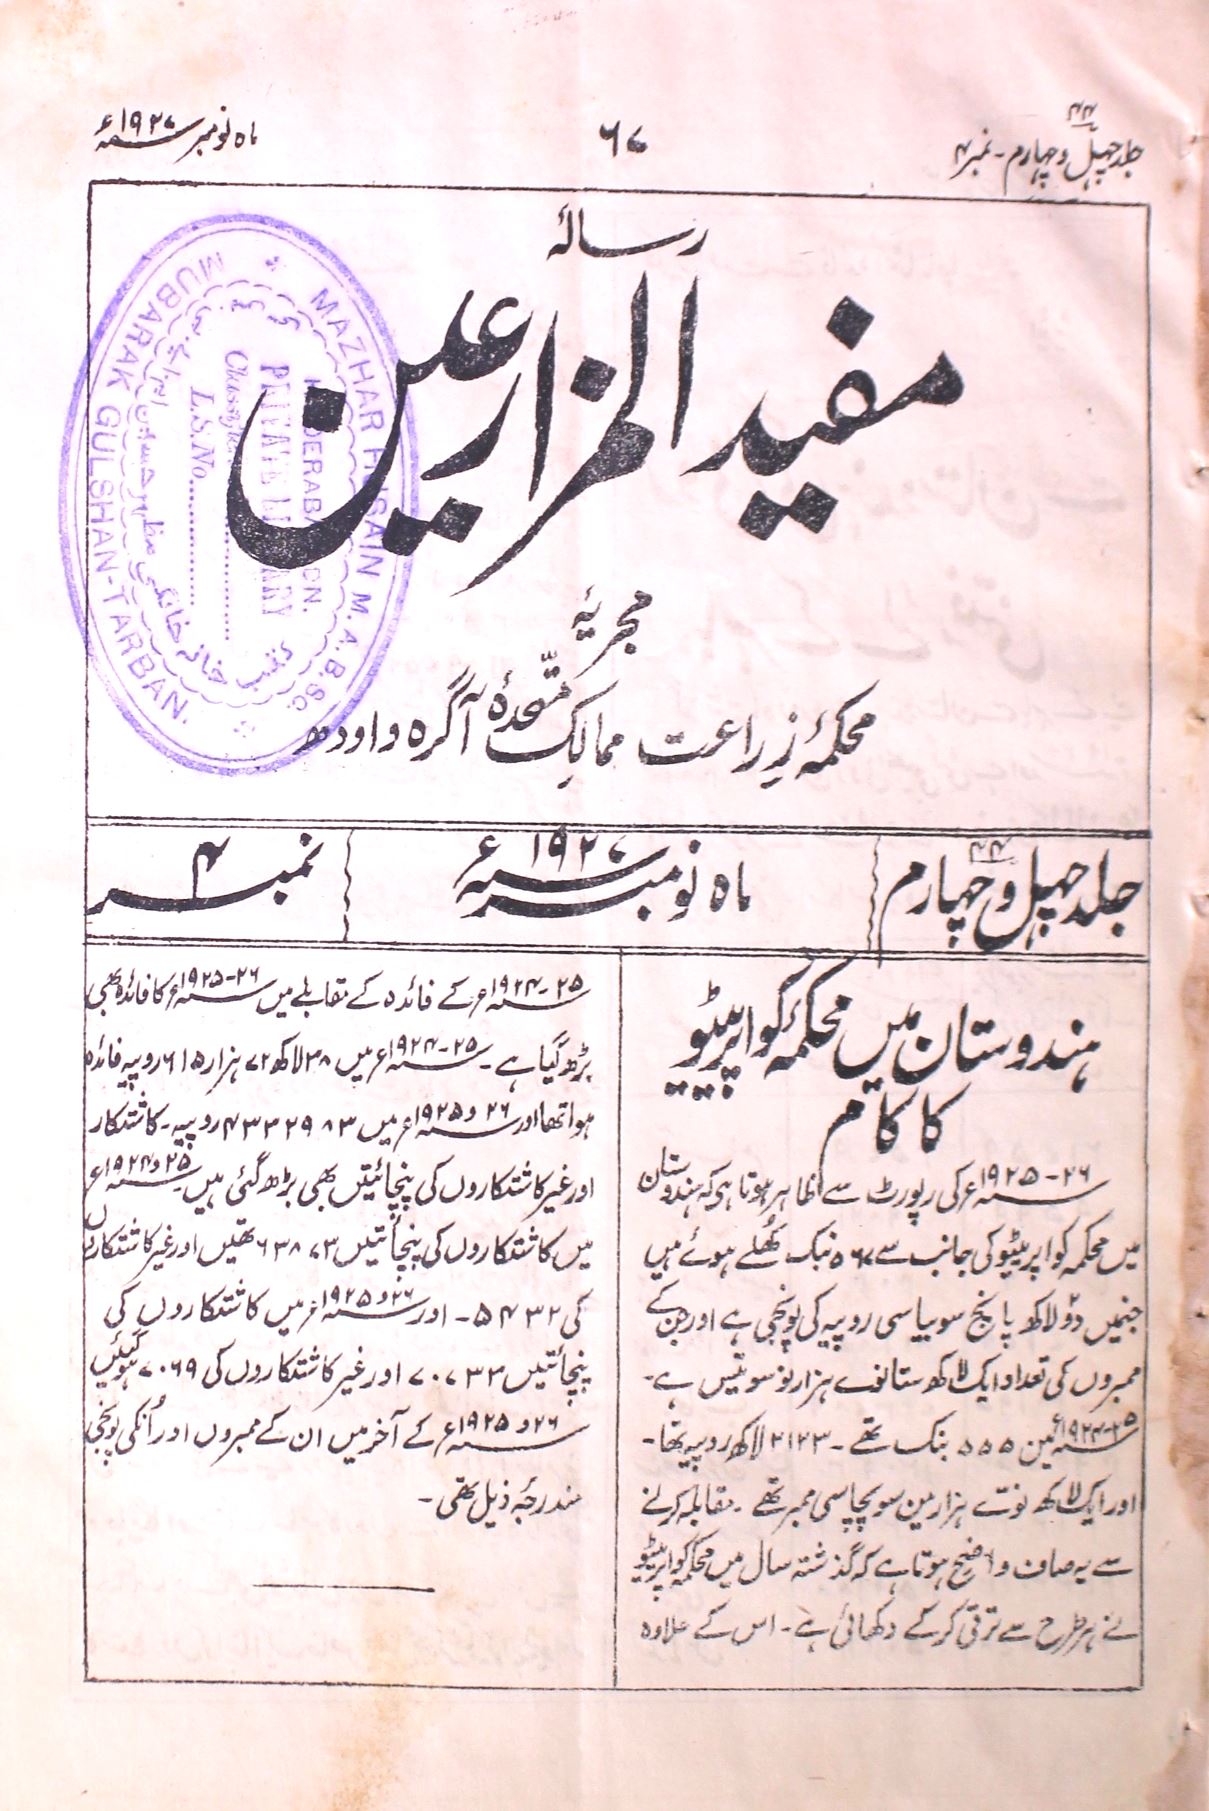 Mufidul Muzarieen Jild.44 No.4 Nov 1927-SVK-Shumara Number-004